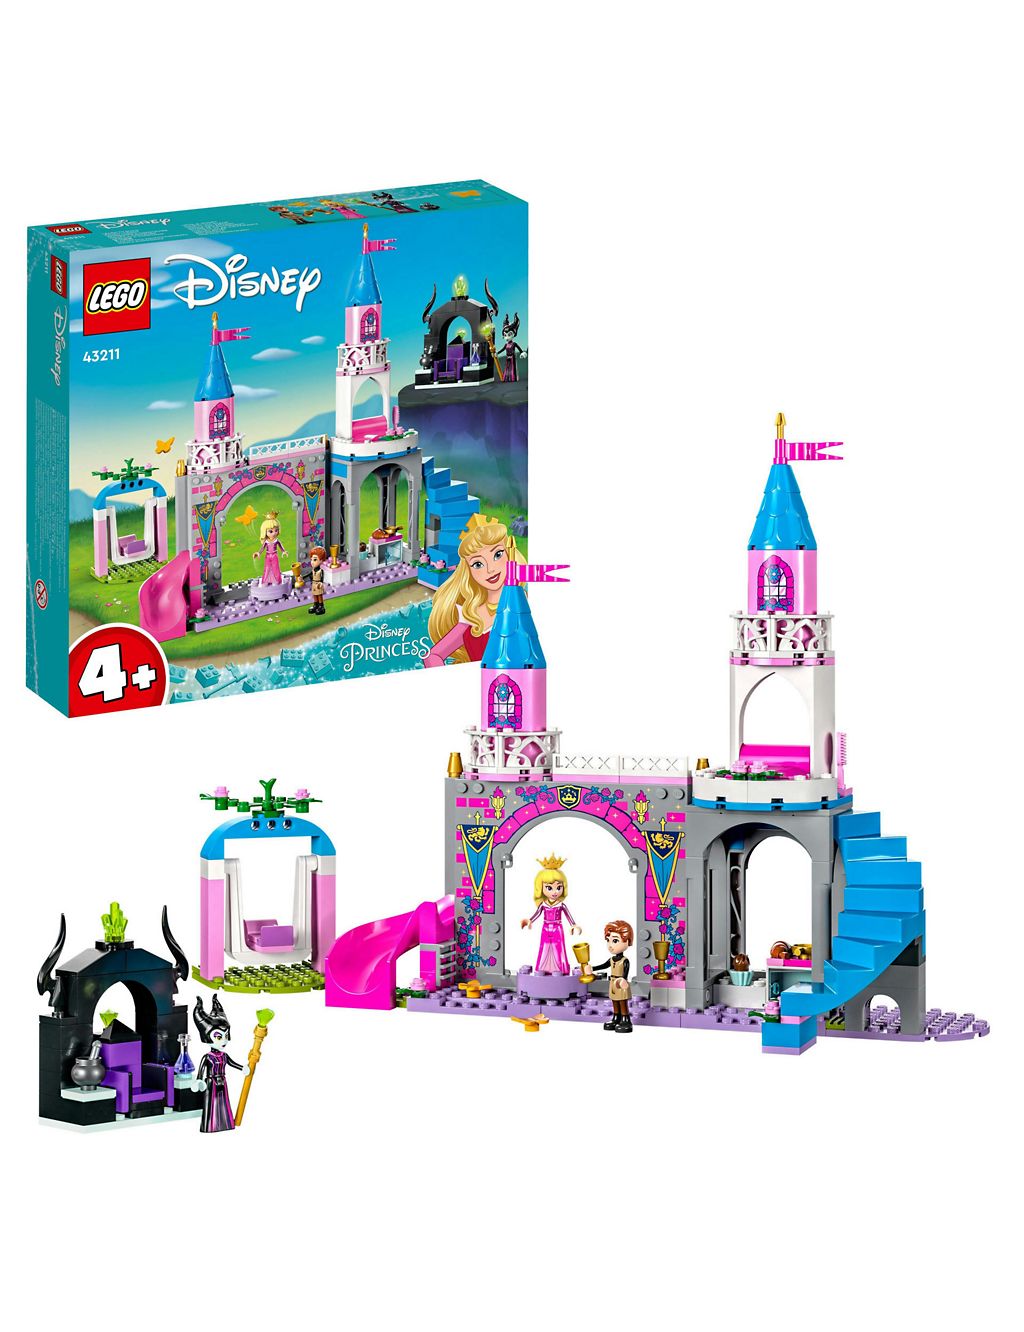 LEGO|Disney Princess Aurora's Castle Set 43211 (4+ Yrs) 2 of 7